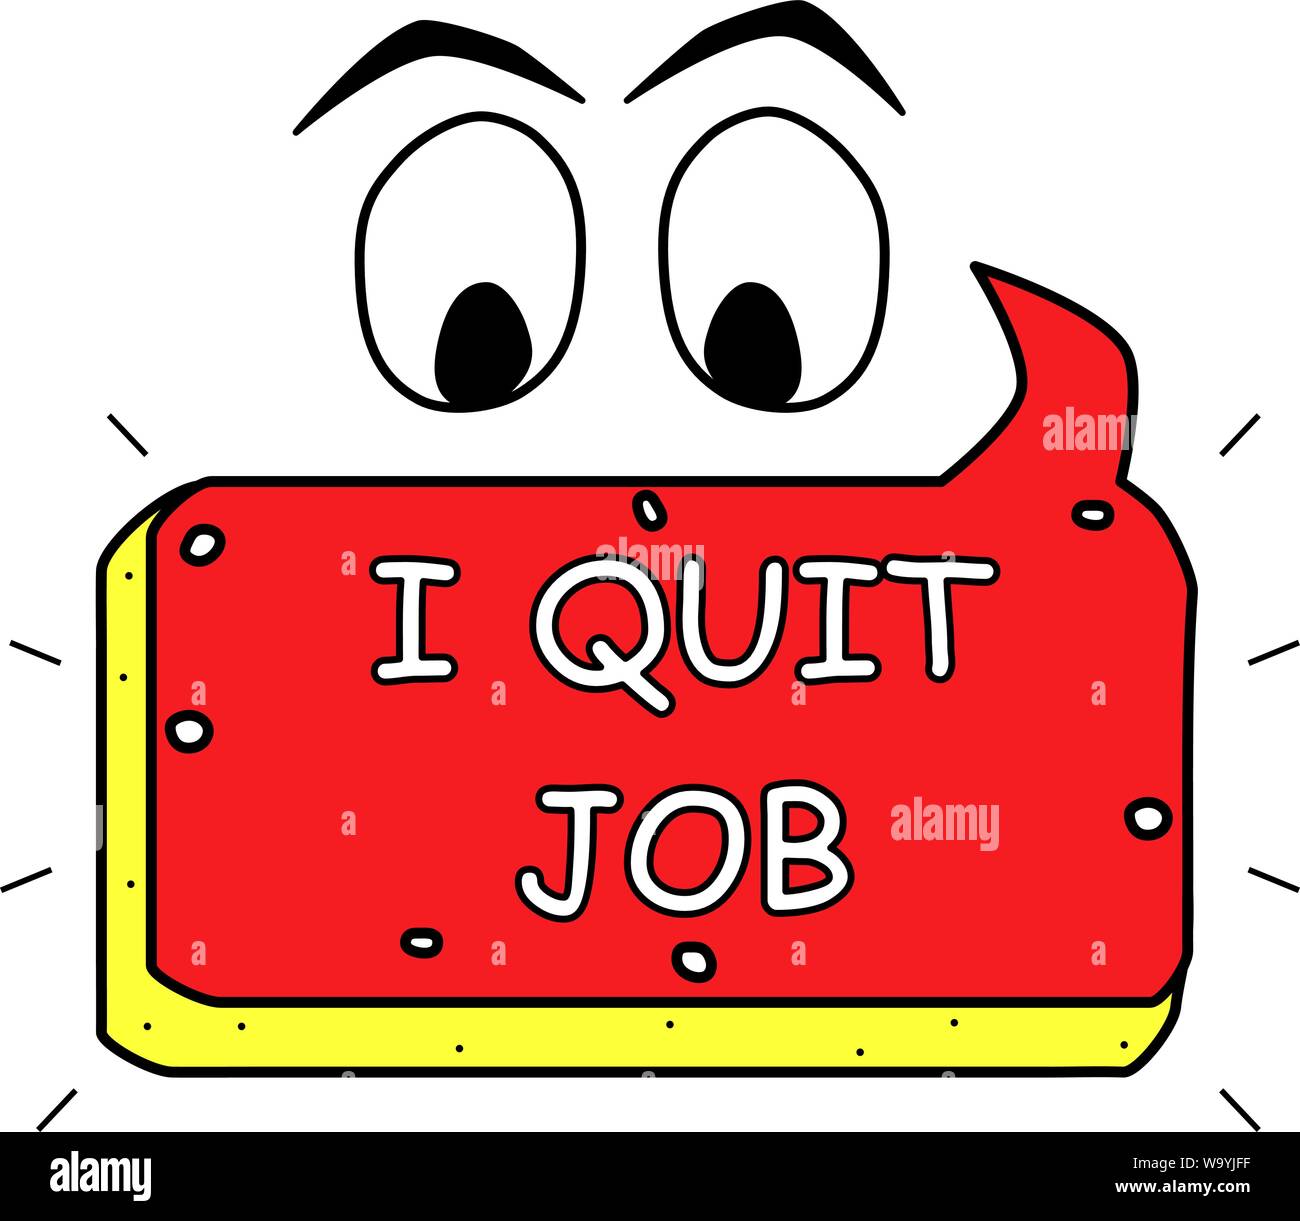 I quit job icon, poster. Color element illustration, badge. Outline object. Web sticker, banner. Stock Vector